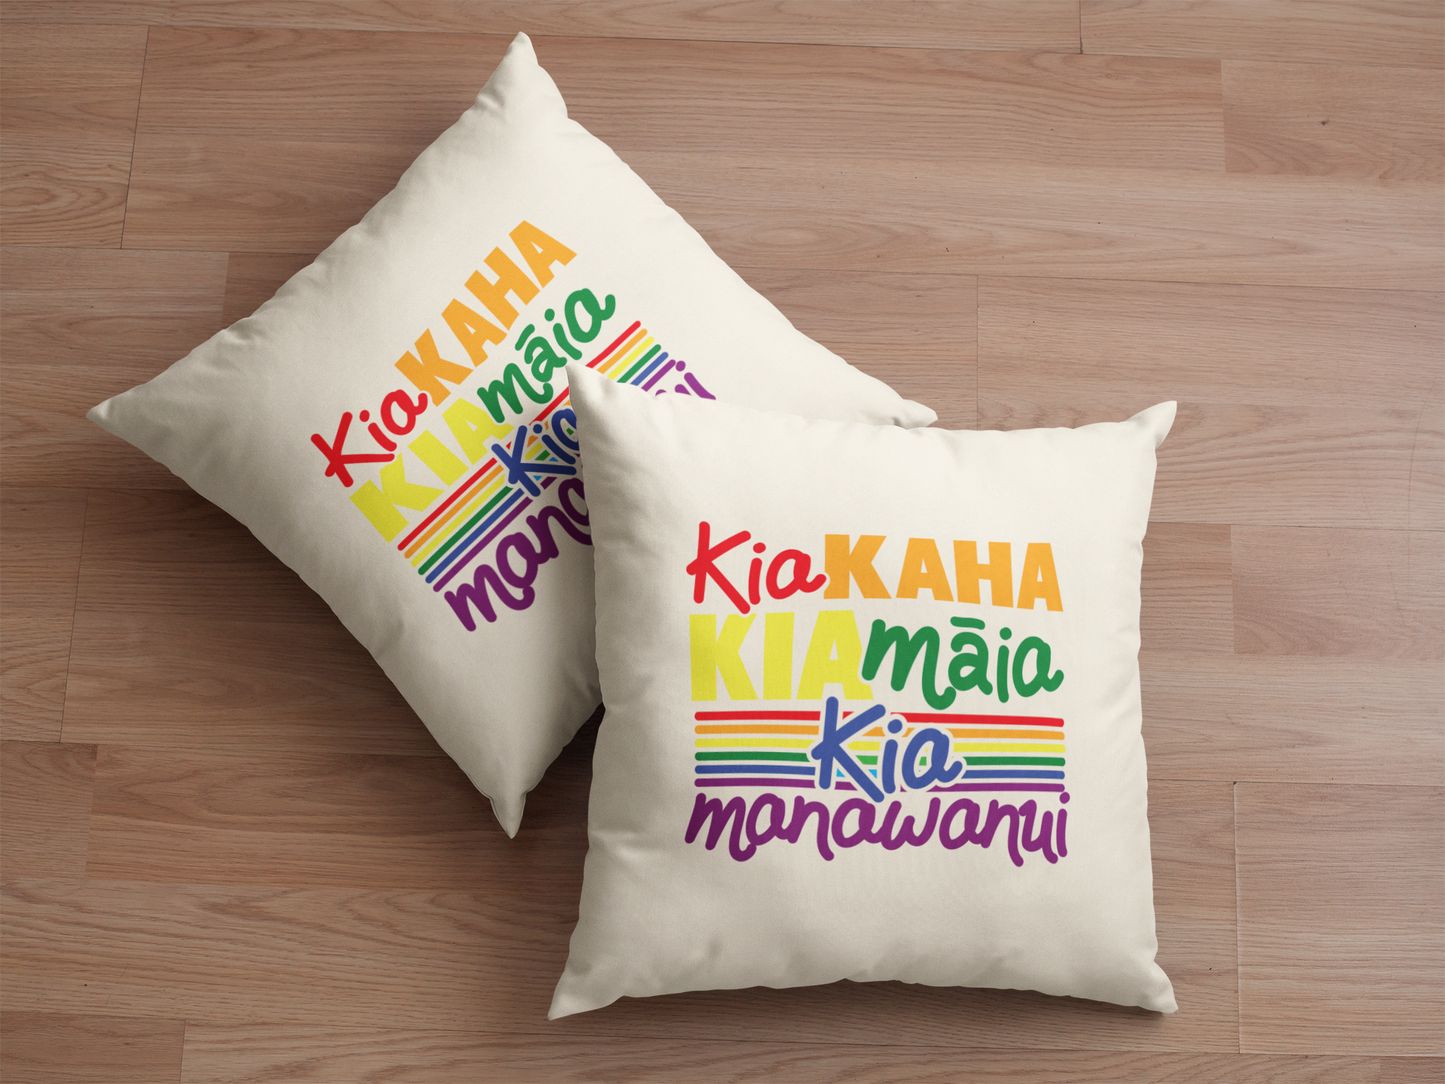 Cushion Cover - Kia Kaha